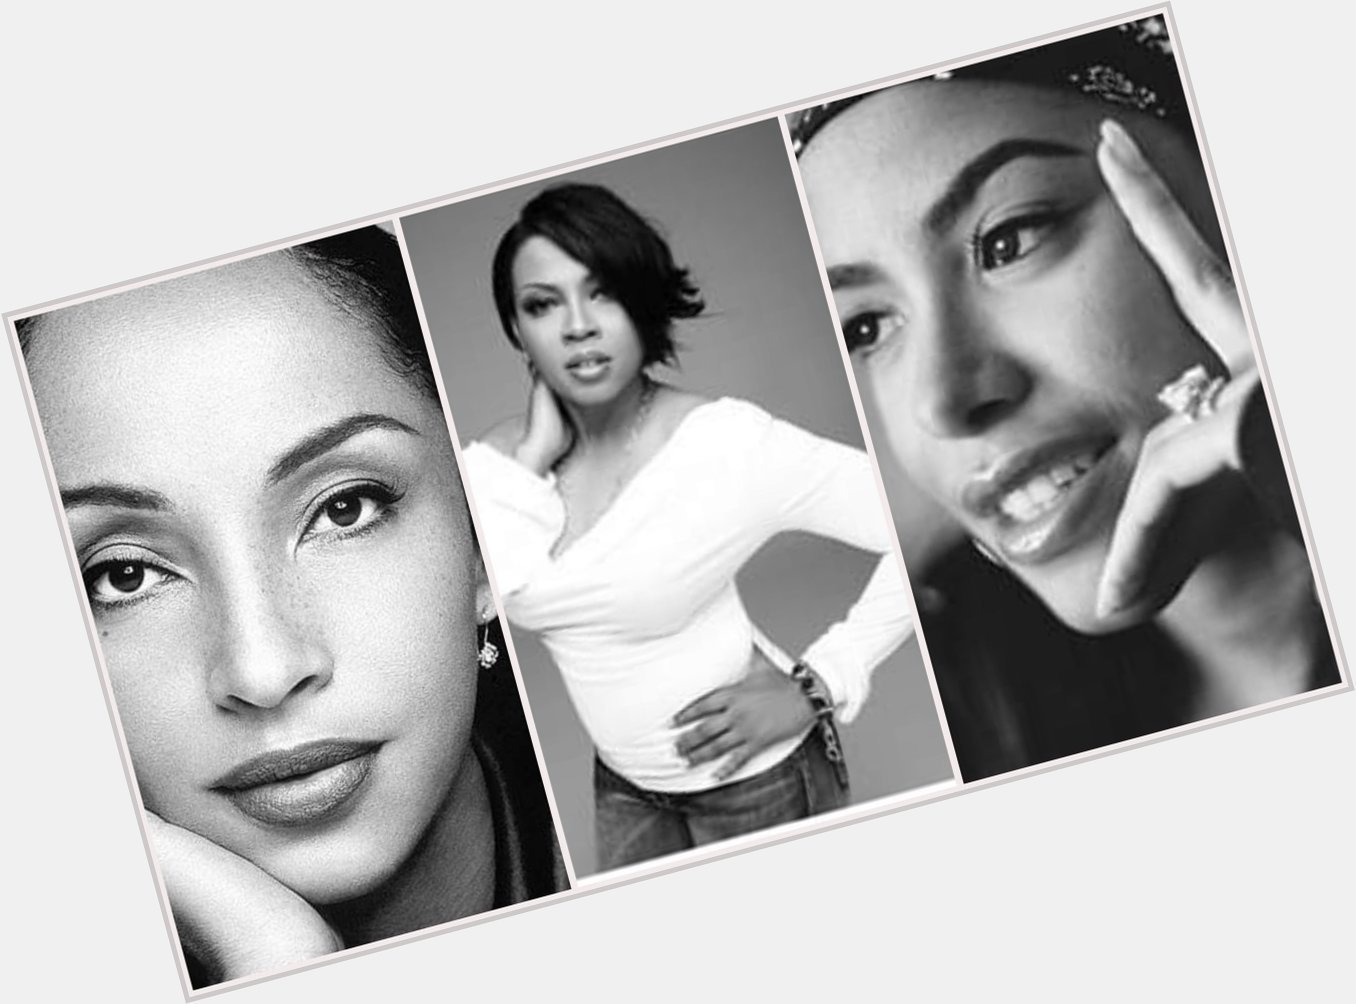 Happy Birthday to Sade Adu, Maxine Jones (formerly of En Vogue) & Aaliyah 